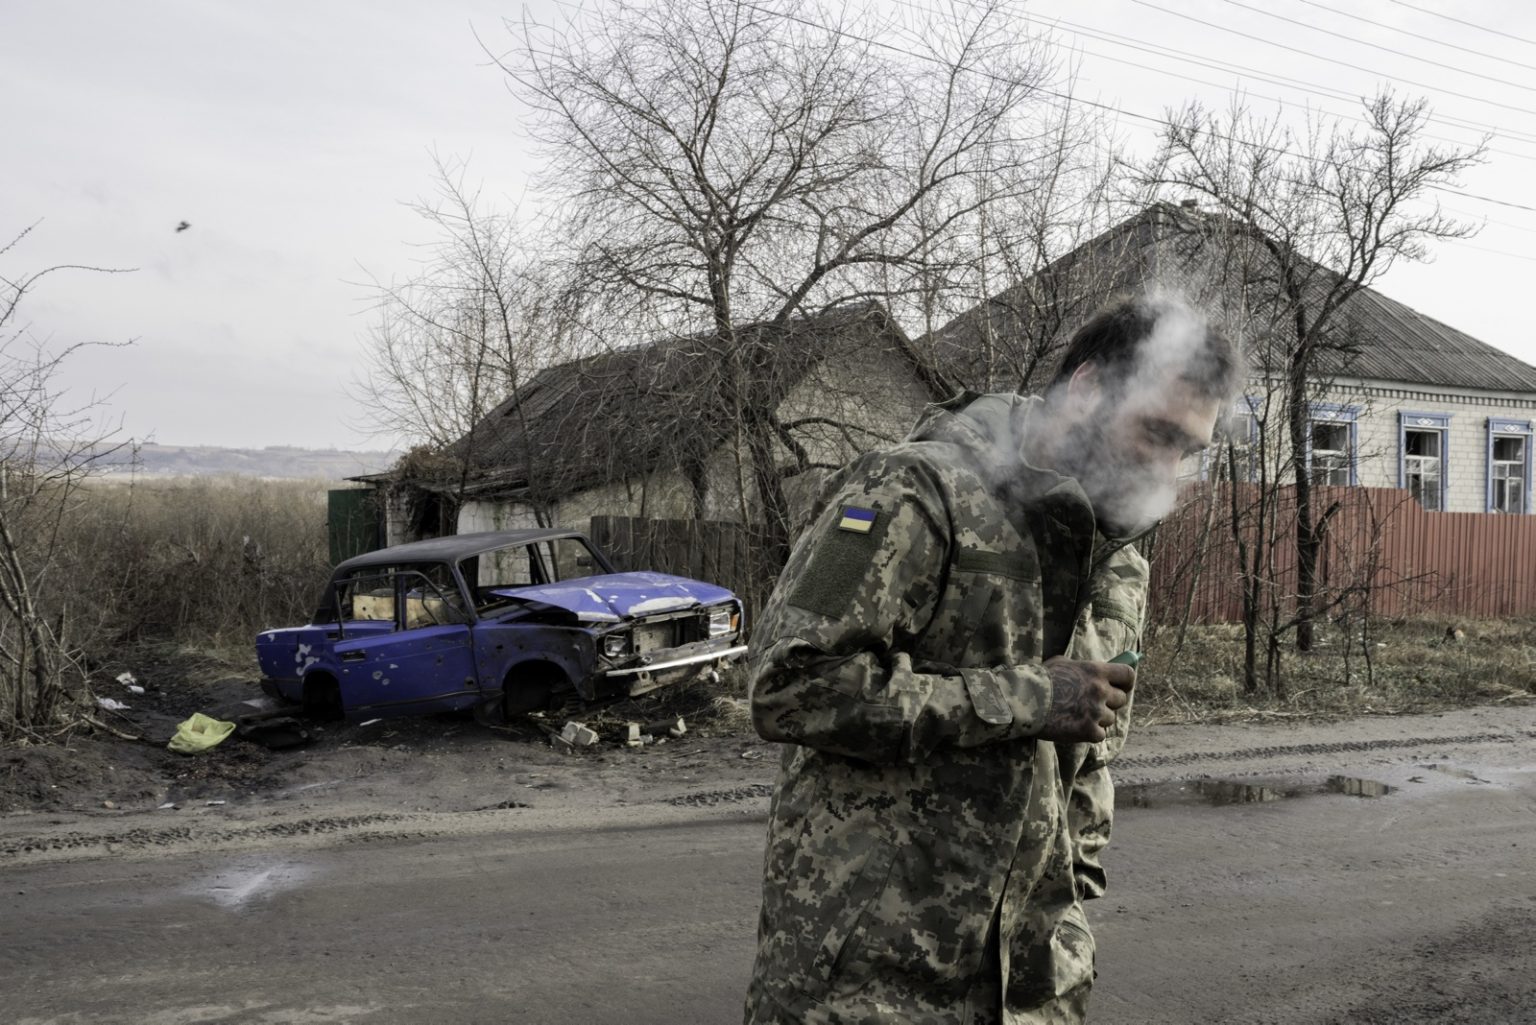 UKRAINE, Zarichne. January 20, 2023 - A Ukrainian serviceman smokes a sigarette in the street of Zarichne. ><
UCRAINA, Zarichne. 20 gennaio 2023 - Un militare ucraino fuma una sigaretta in strada a Zarichne.